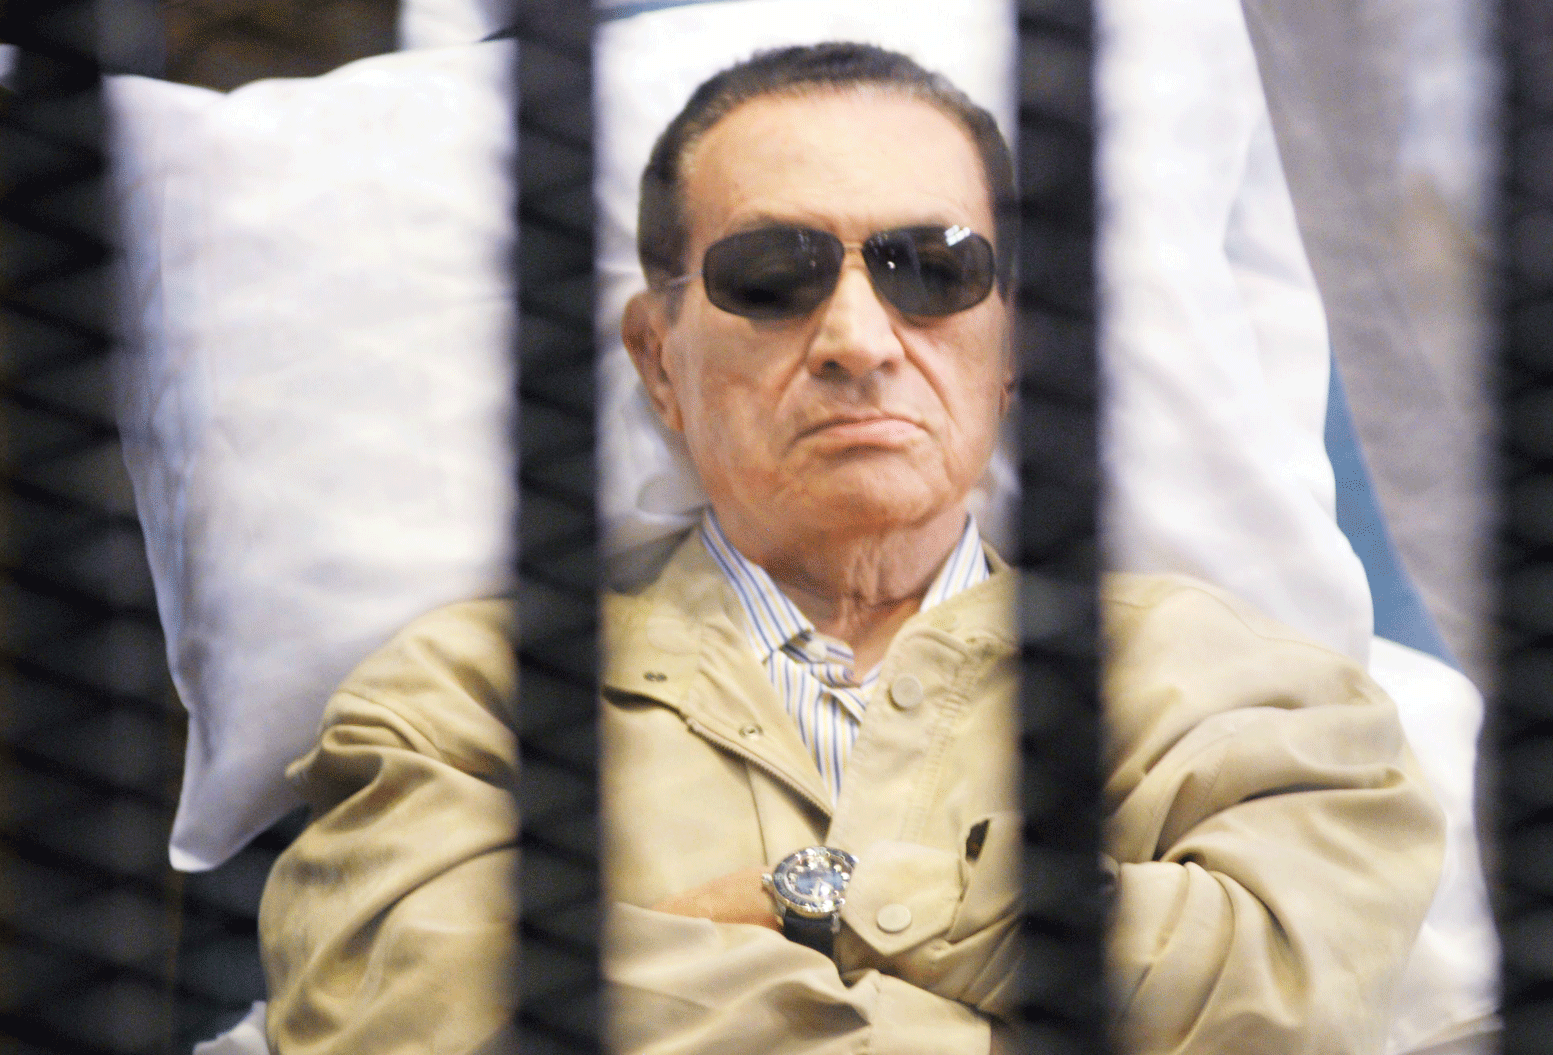 Critics slam Egypt's 'selective justice' after Mubarak ruling